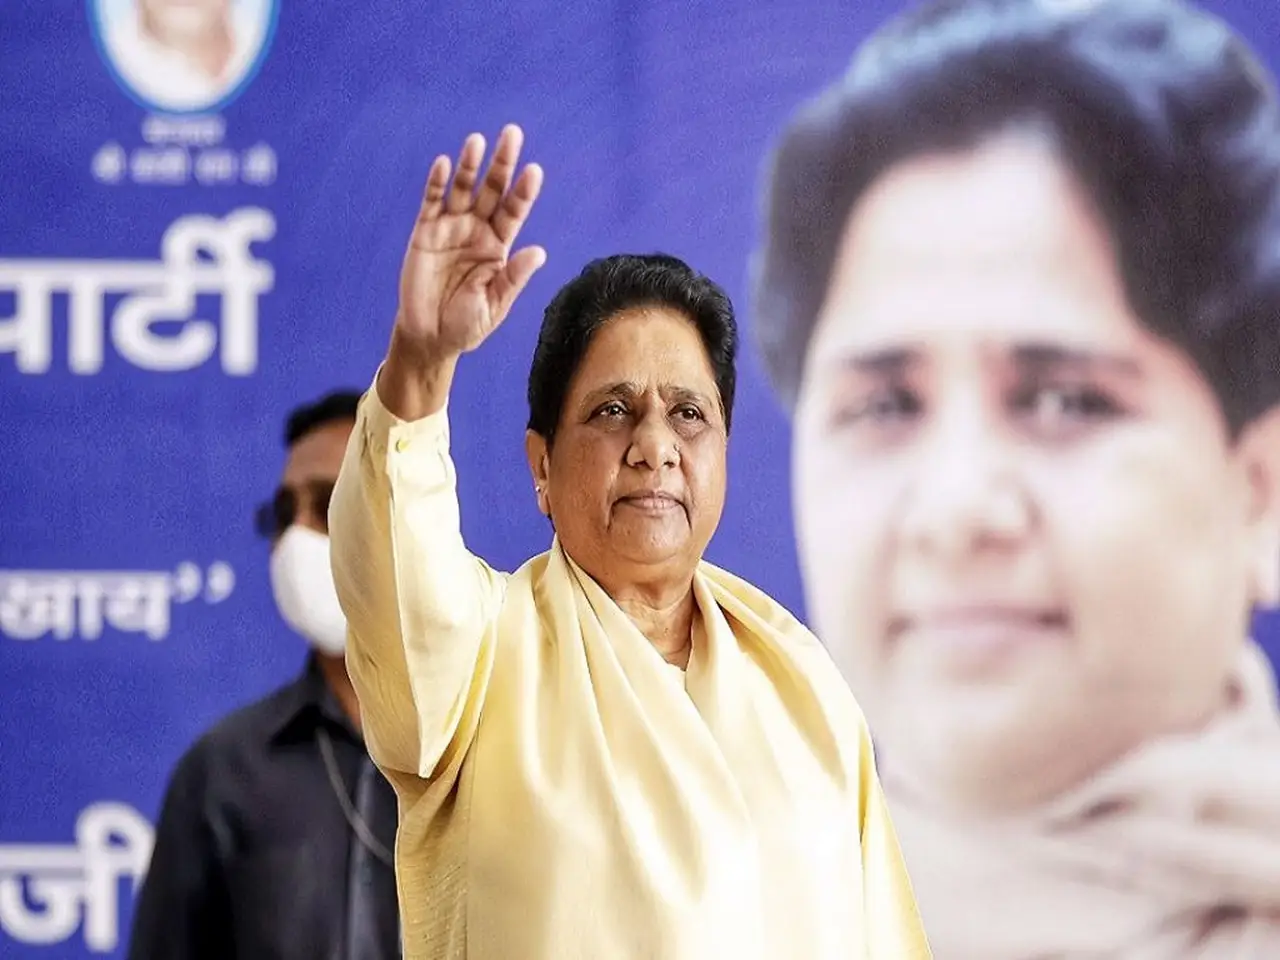 Mayawati, National President, Bahujan Samaj Party